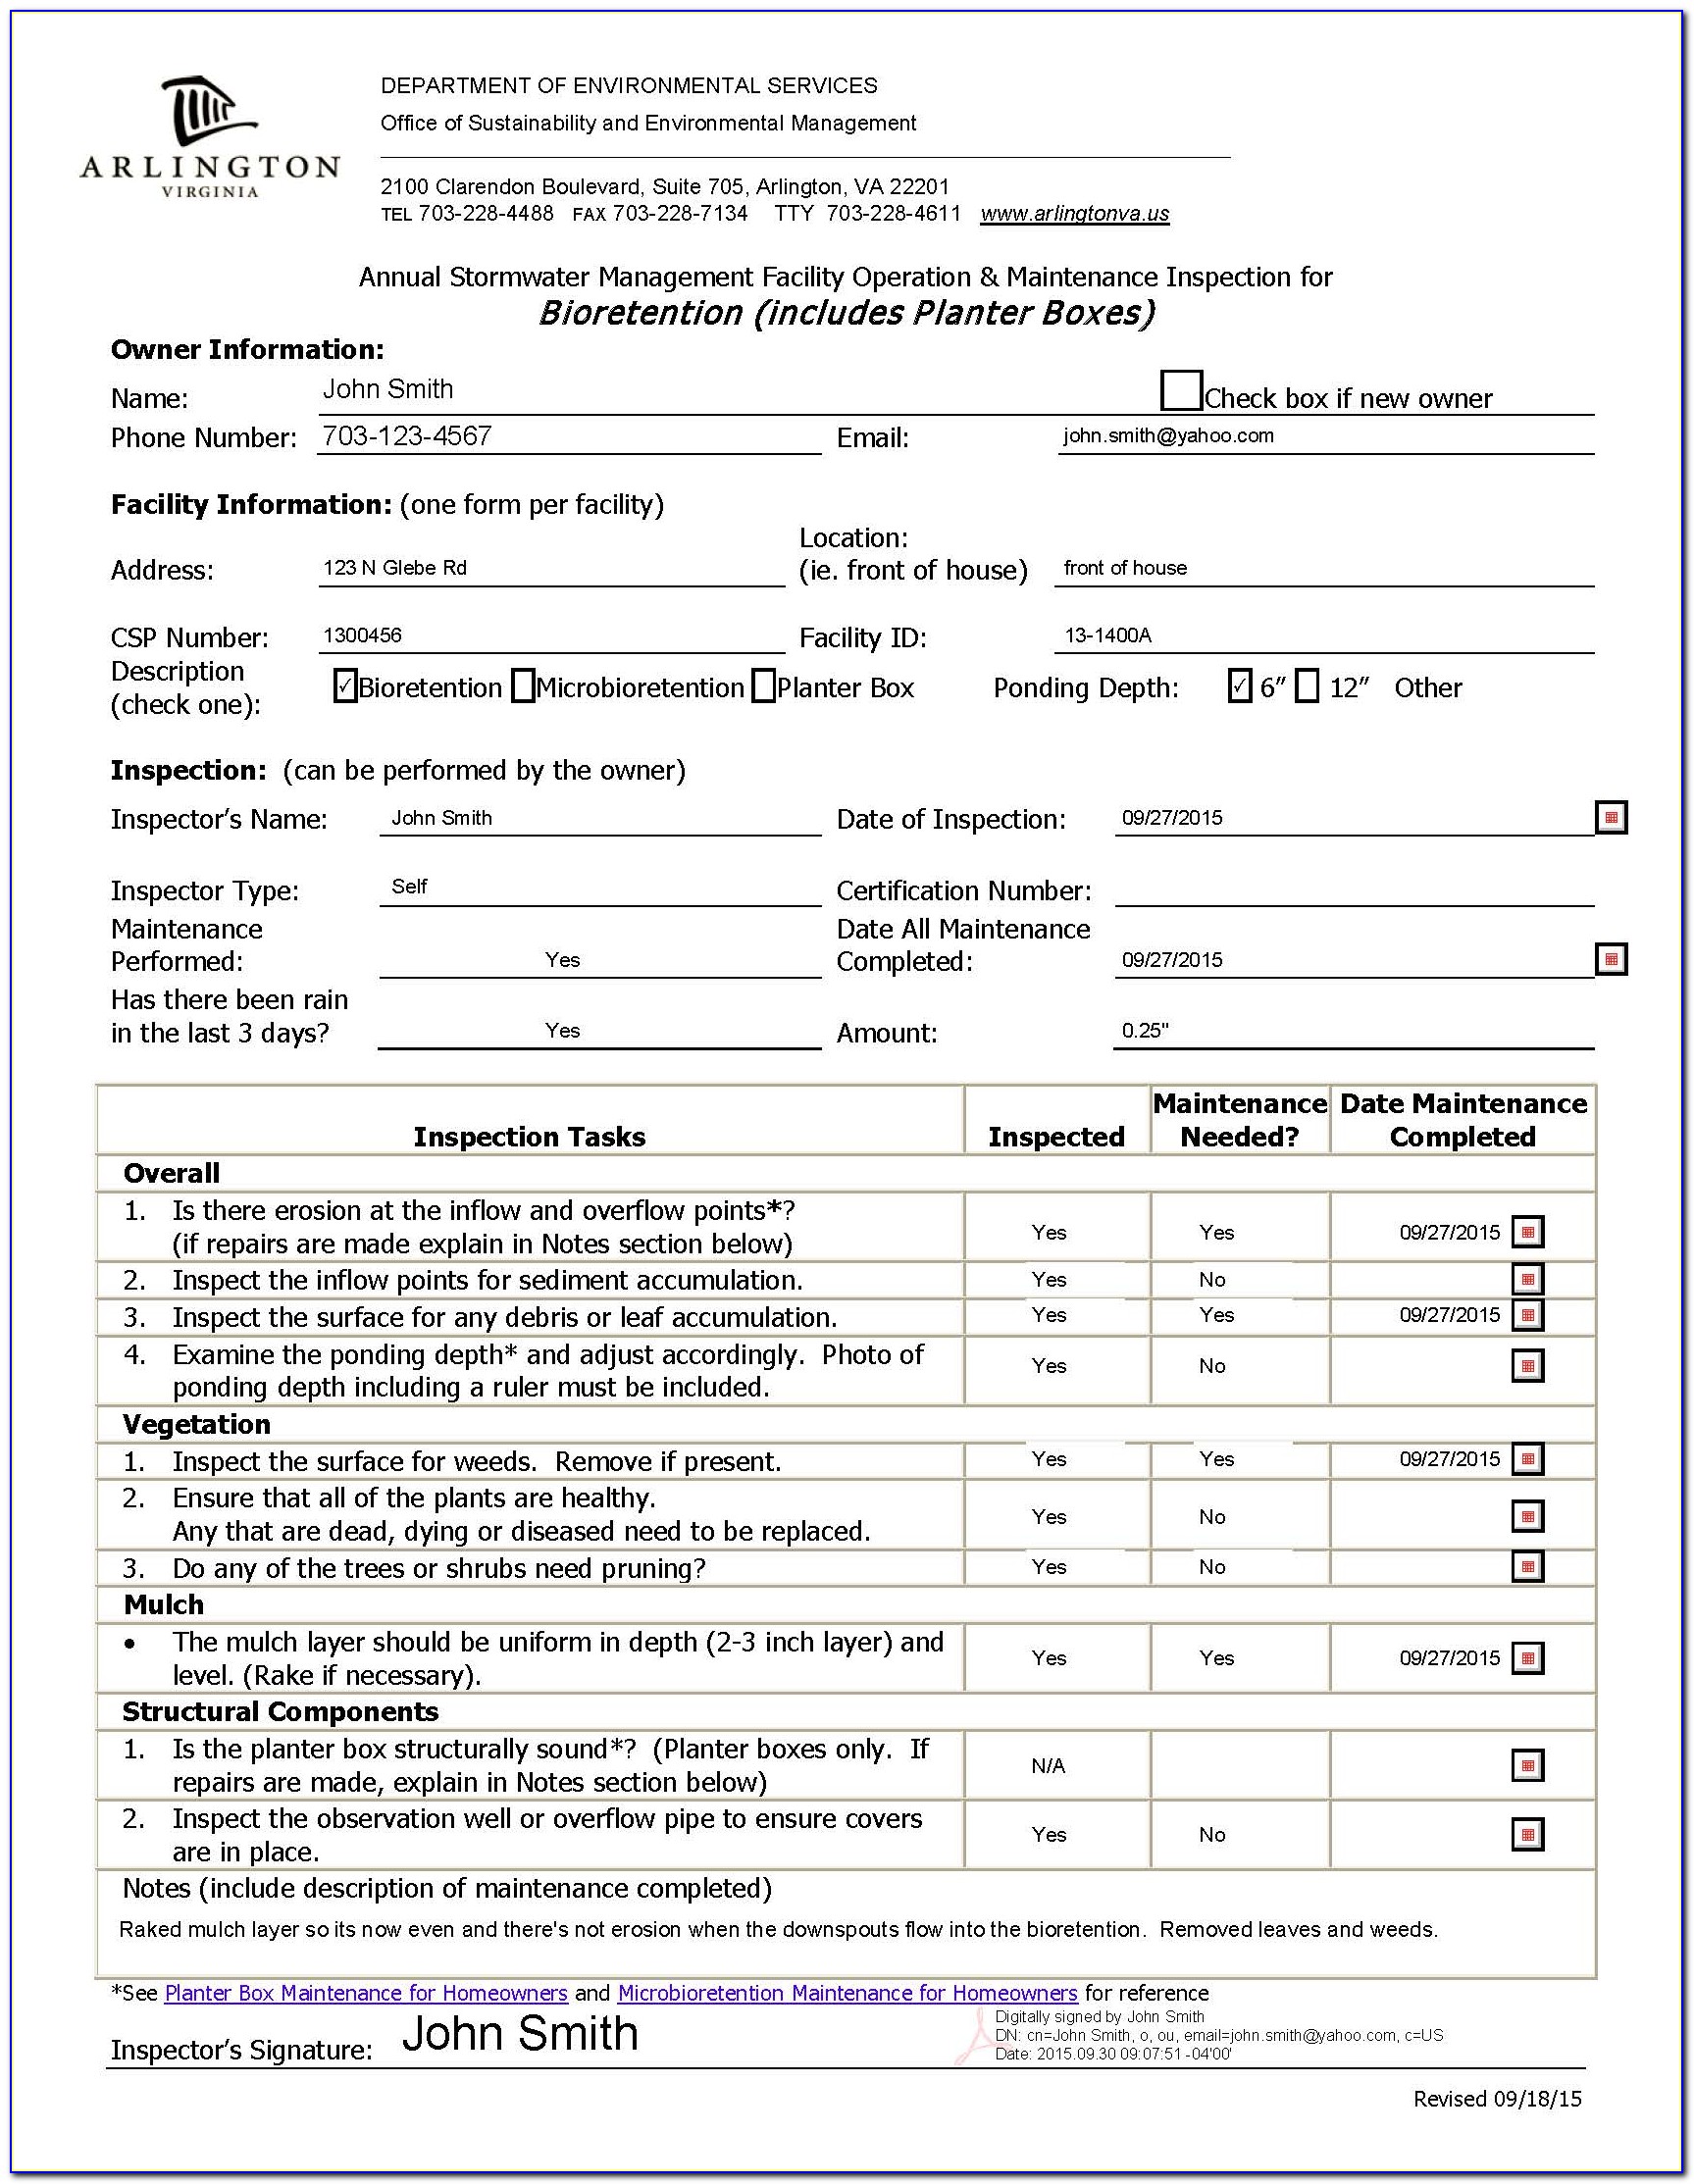 Ohio Epa Swppp Inspection Form